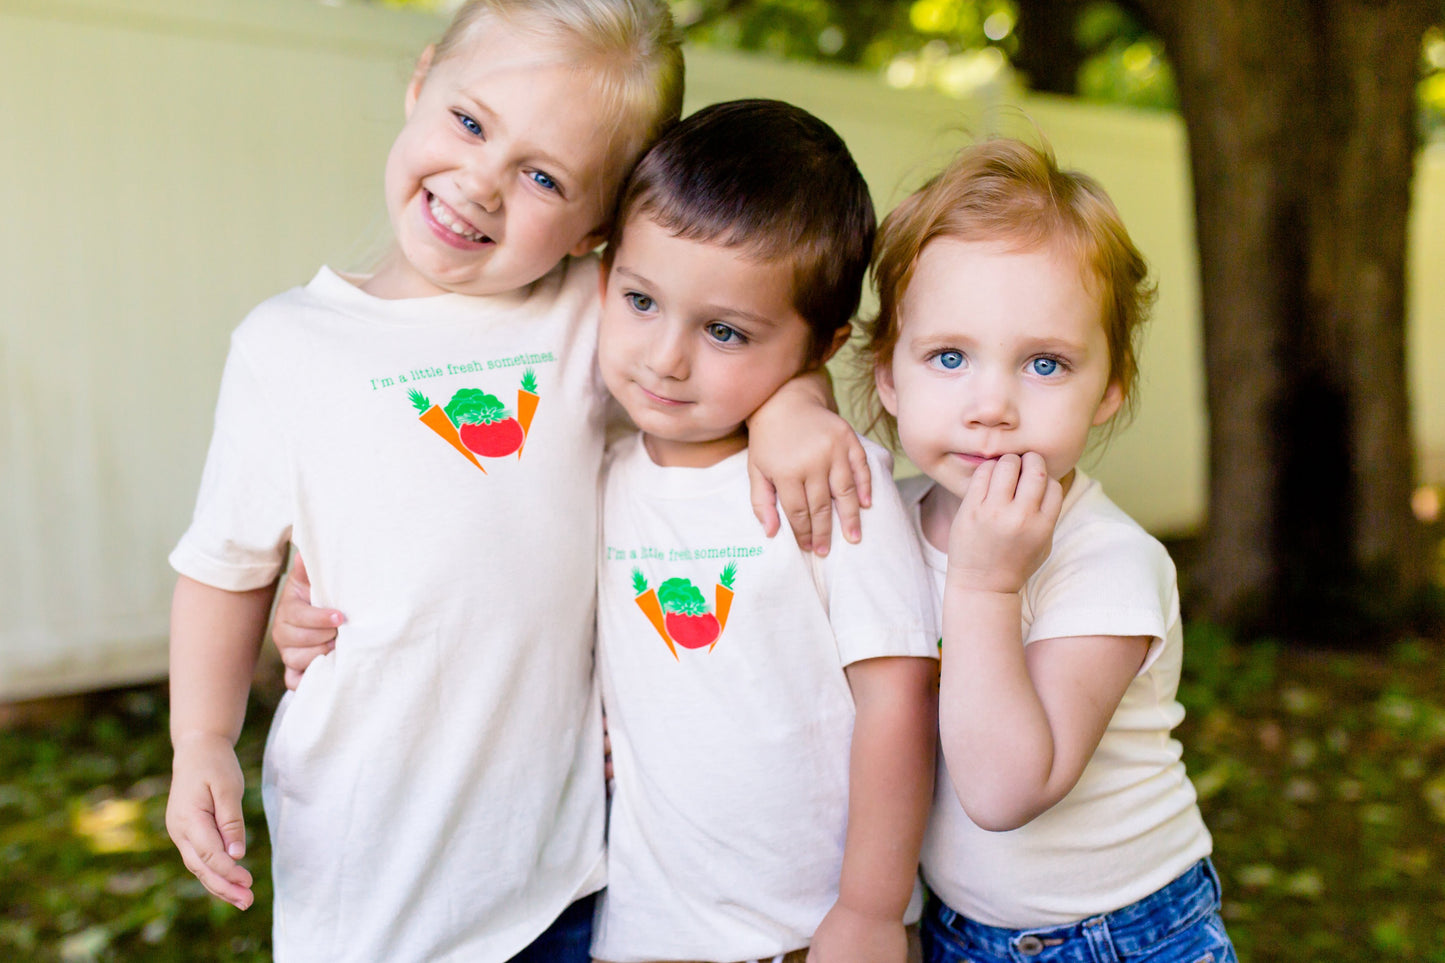 Organic cotton kids t-shirt - Veggie - Simply Chickie